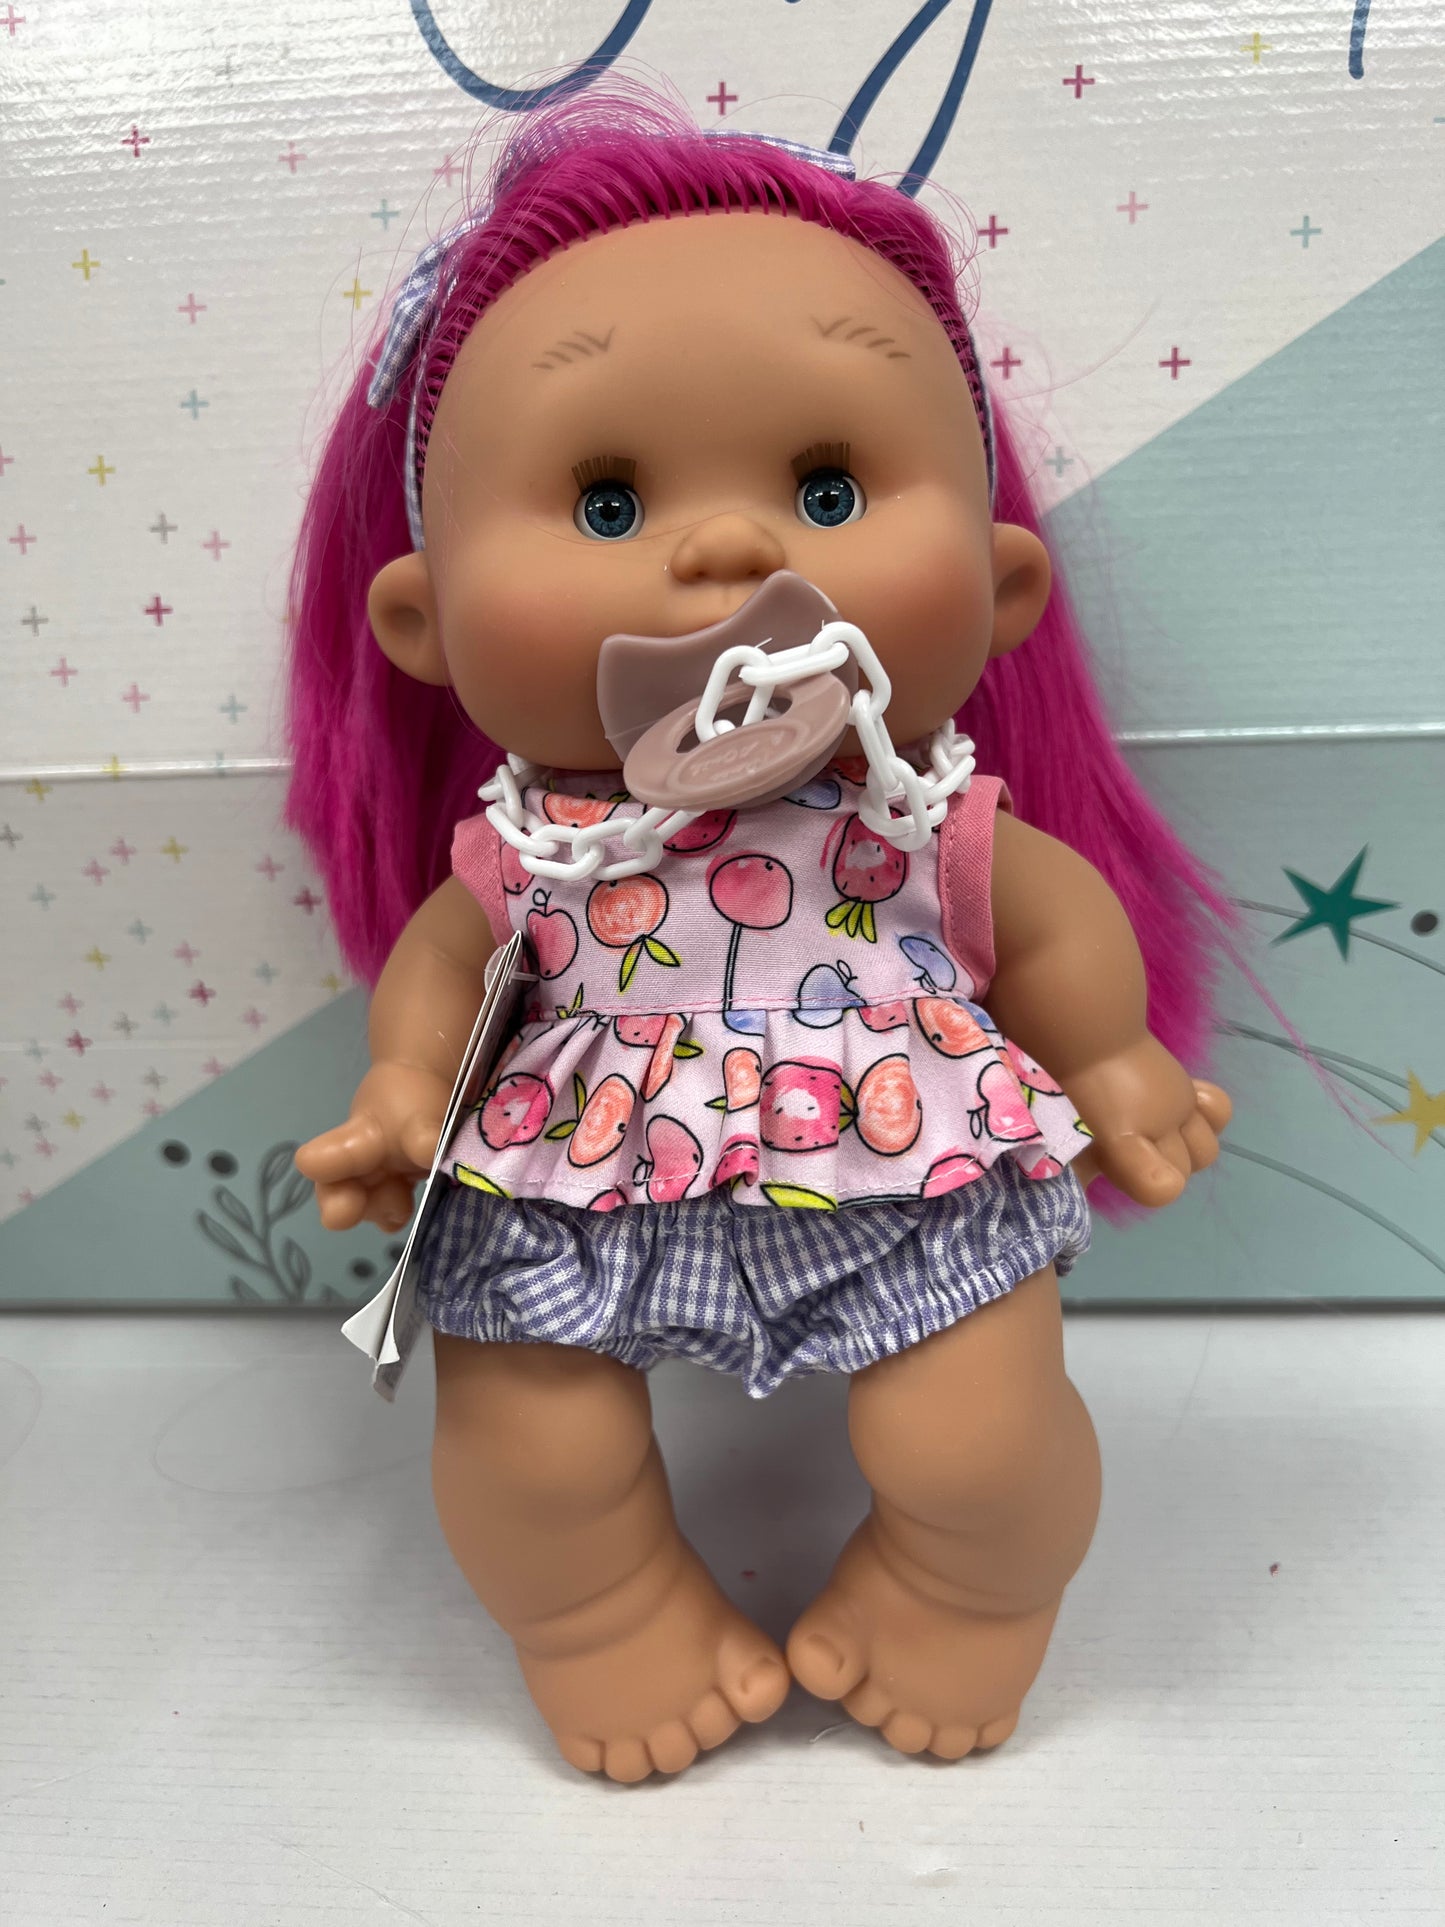 Pepote Fantasy Doll - Bright Pink Hair/Fruit Dress